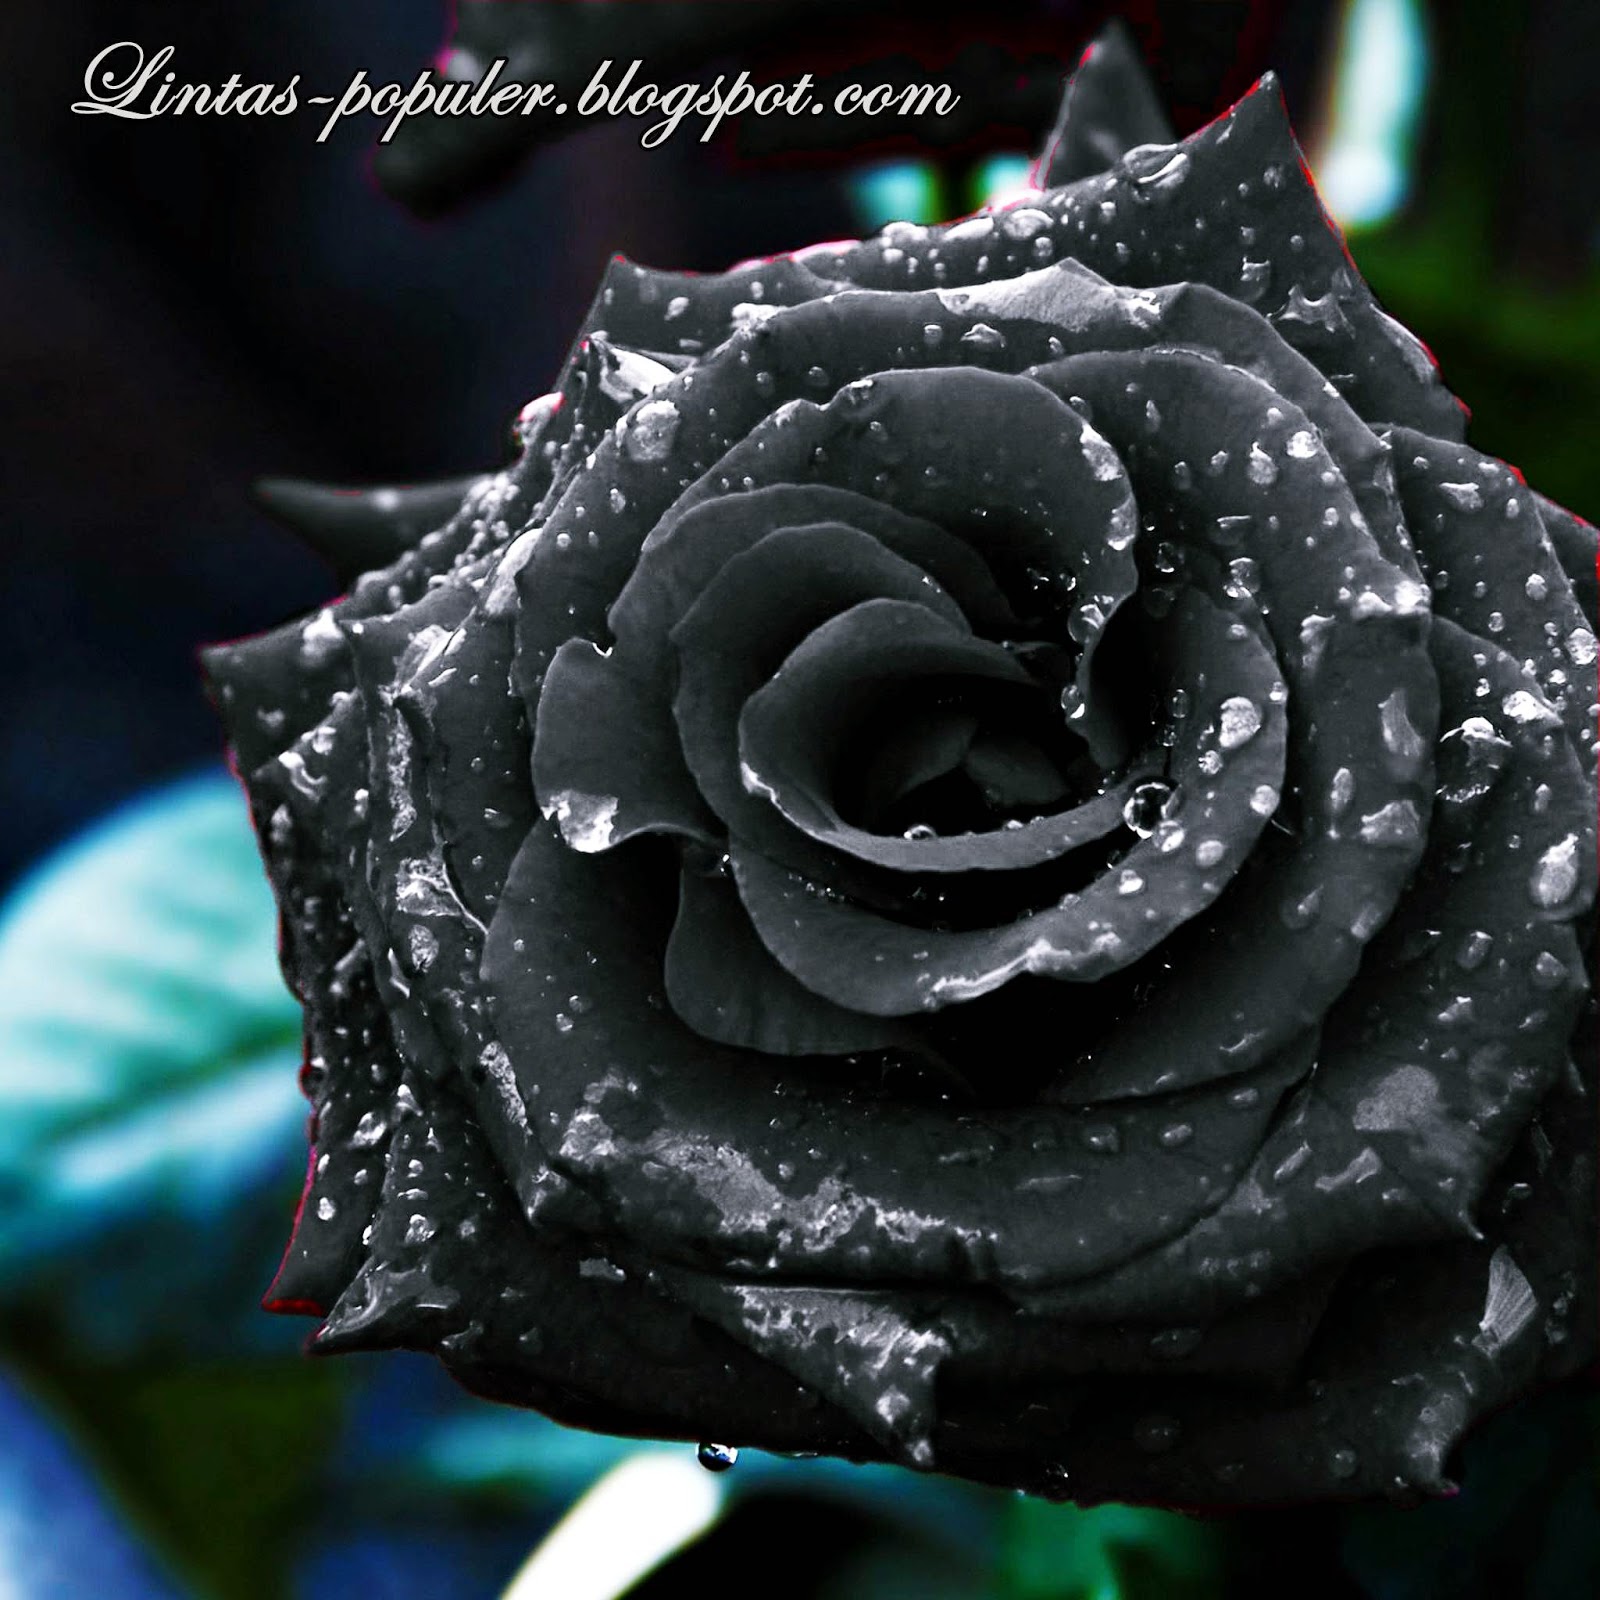 fond d'écran mawar hitam,rose,roses de jardin,fleur,pétale,l'eau